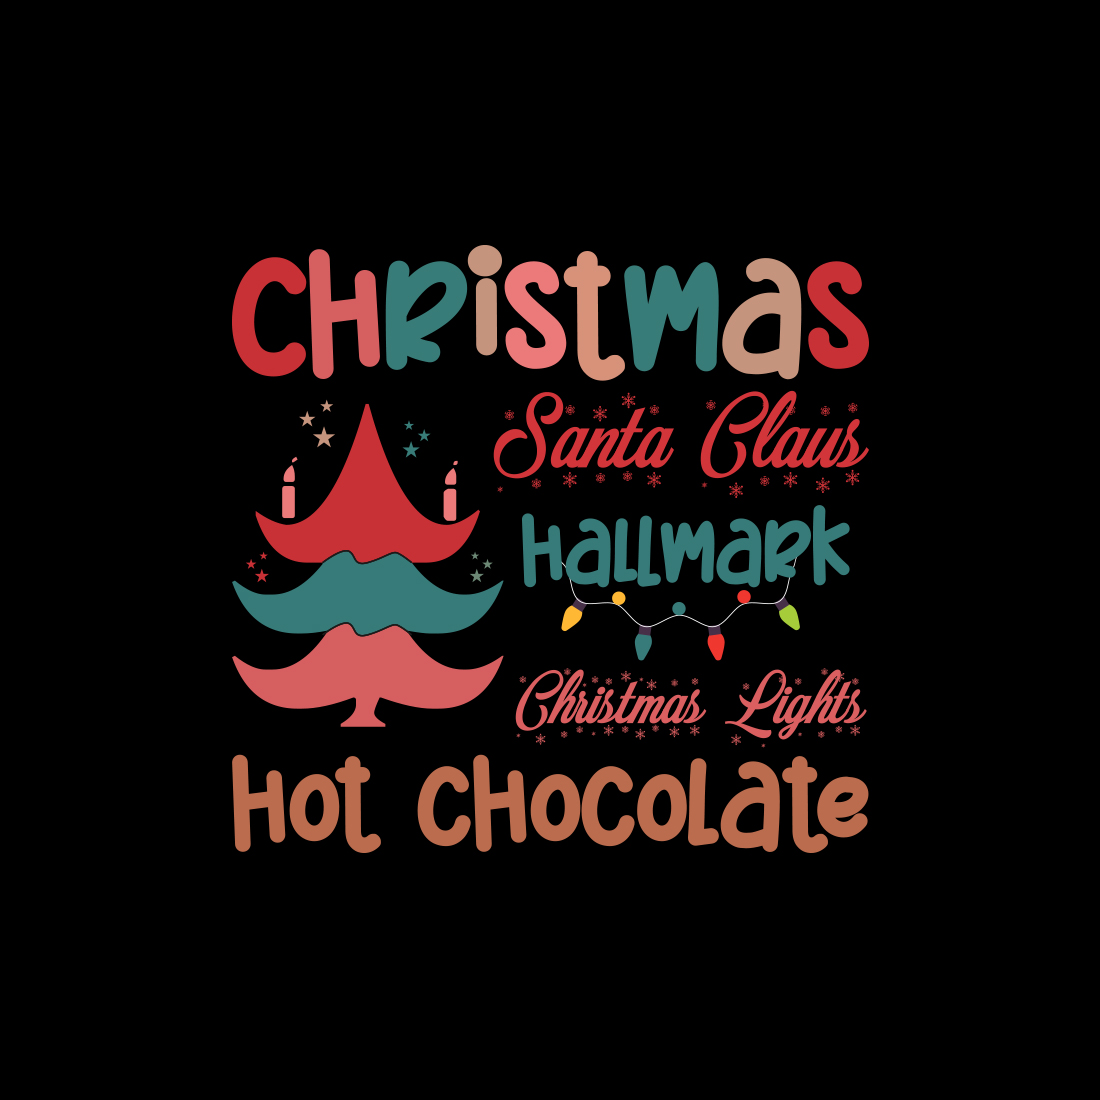 Christmas santa claus hallmark christmas lights hot chocolate T-shirt design preview image.